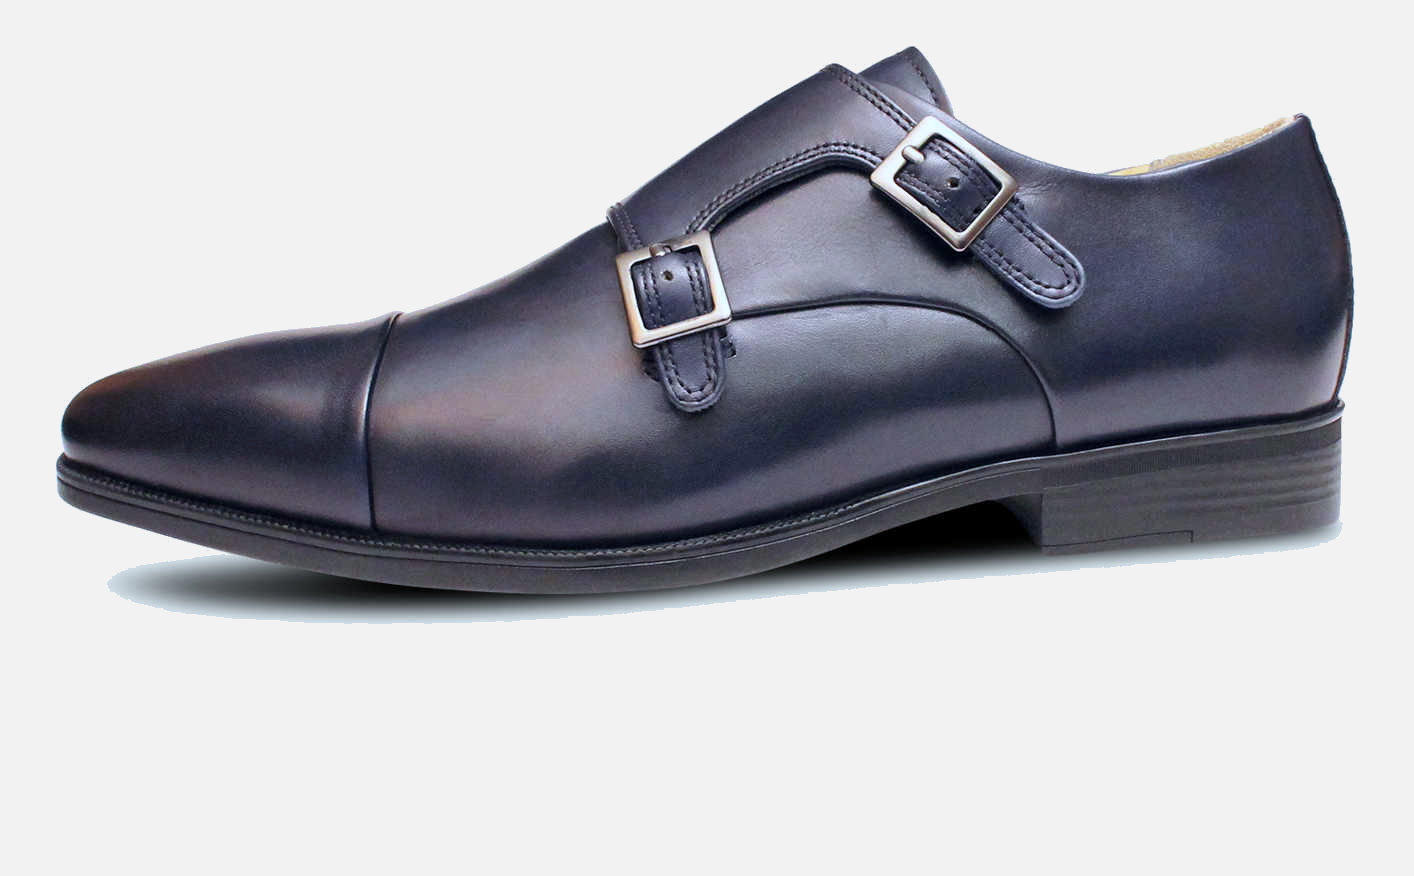 Steptronic Navy Blue Double Buckle Monk Strap Comfort Shoe